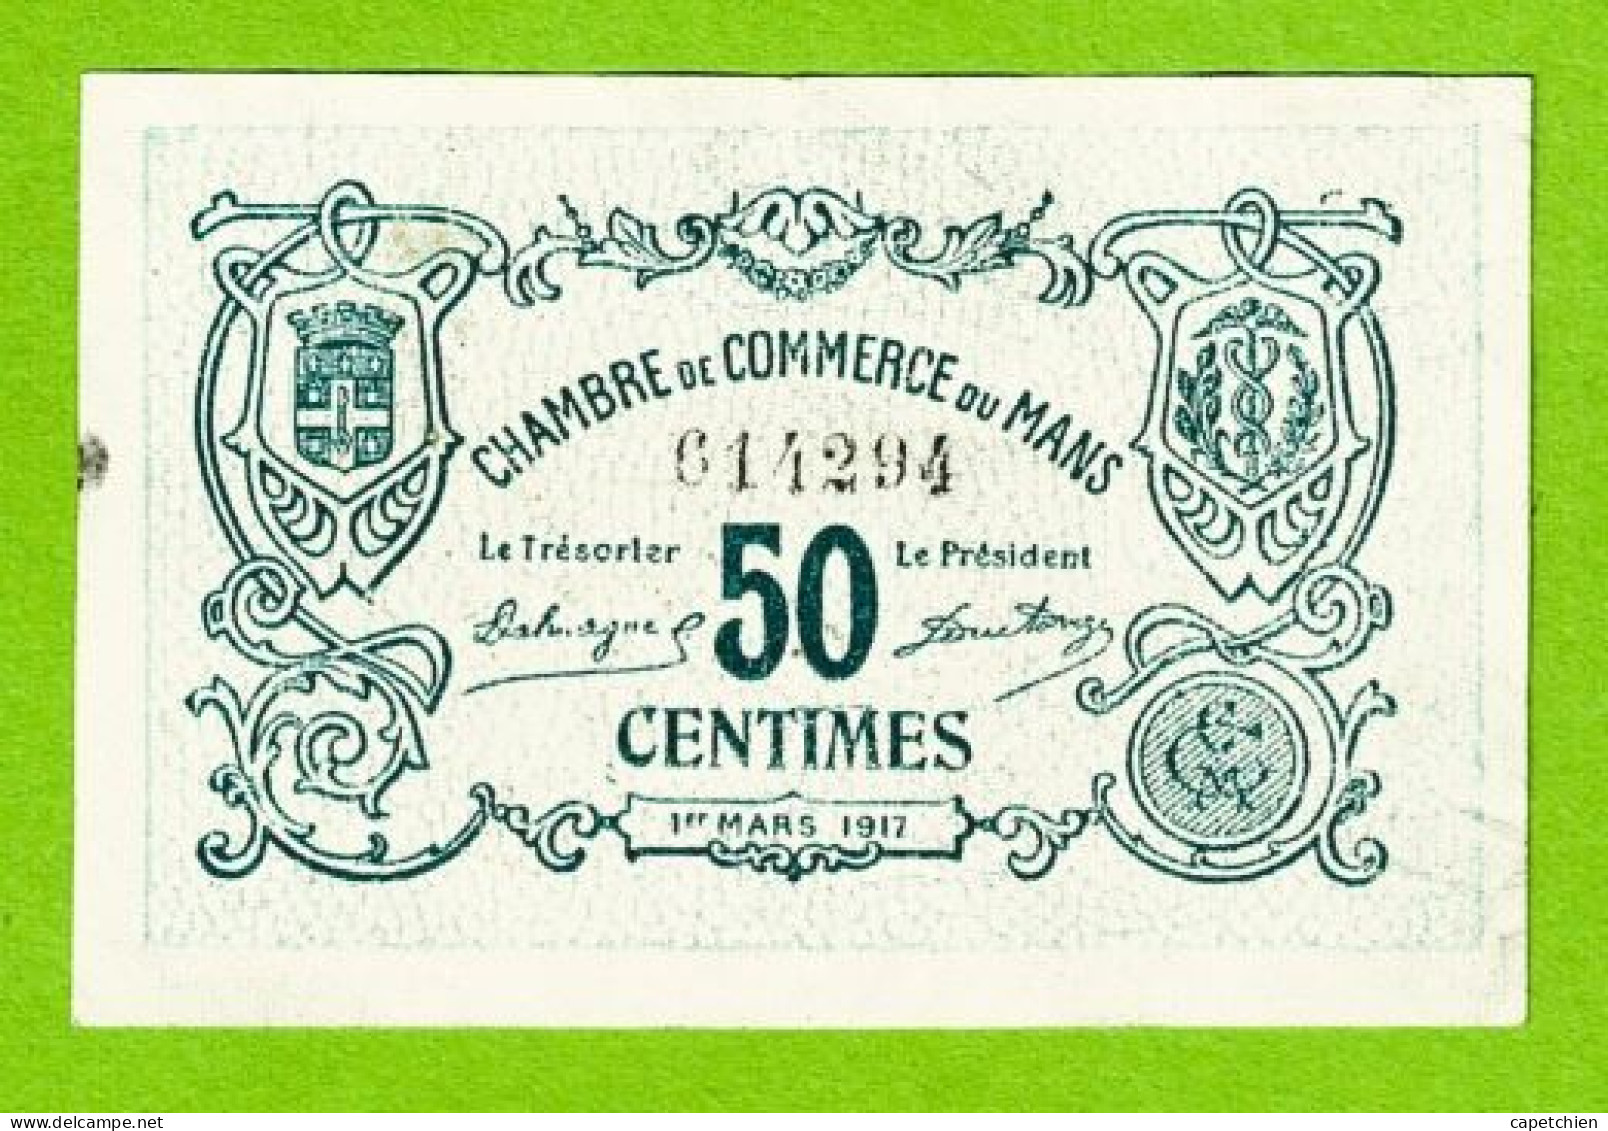 FRANCE / LE MANS / 50 CENTIMES / 1er MARS 1917 / N° 614294 - 2eme SERIE - Cámara De Comercio